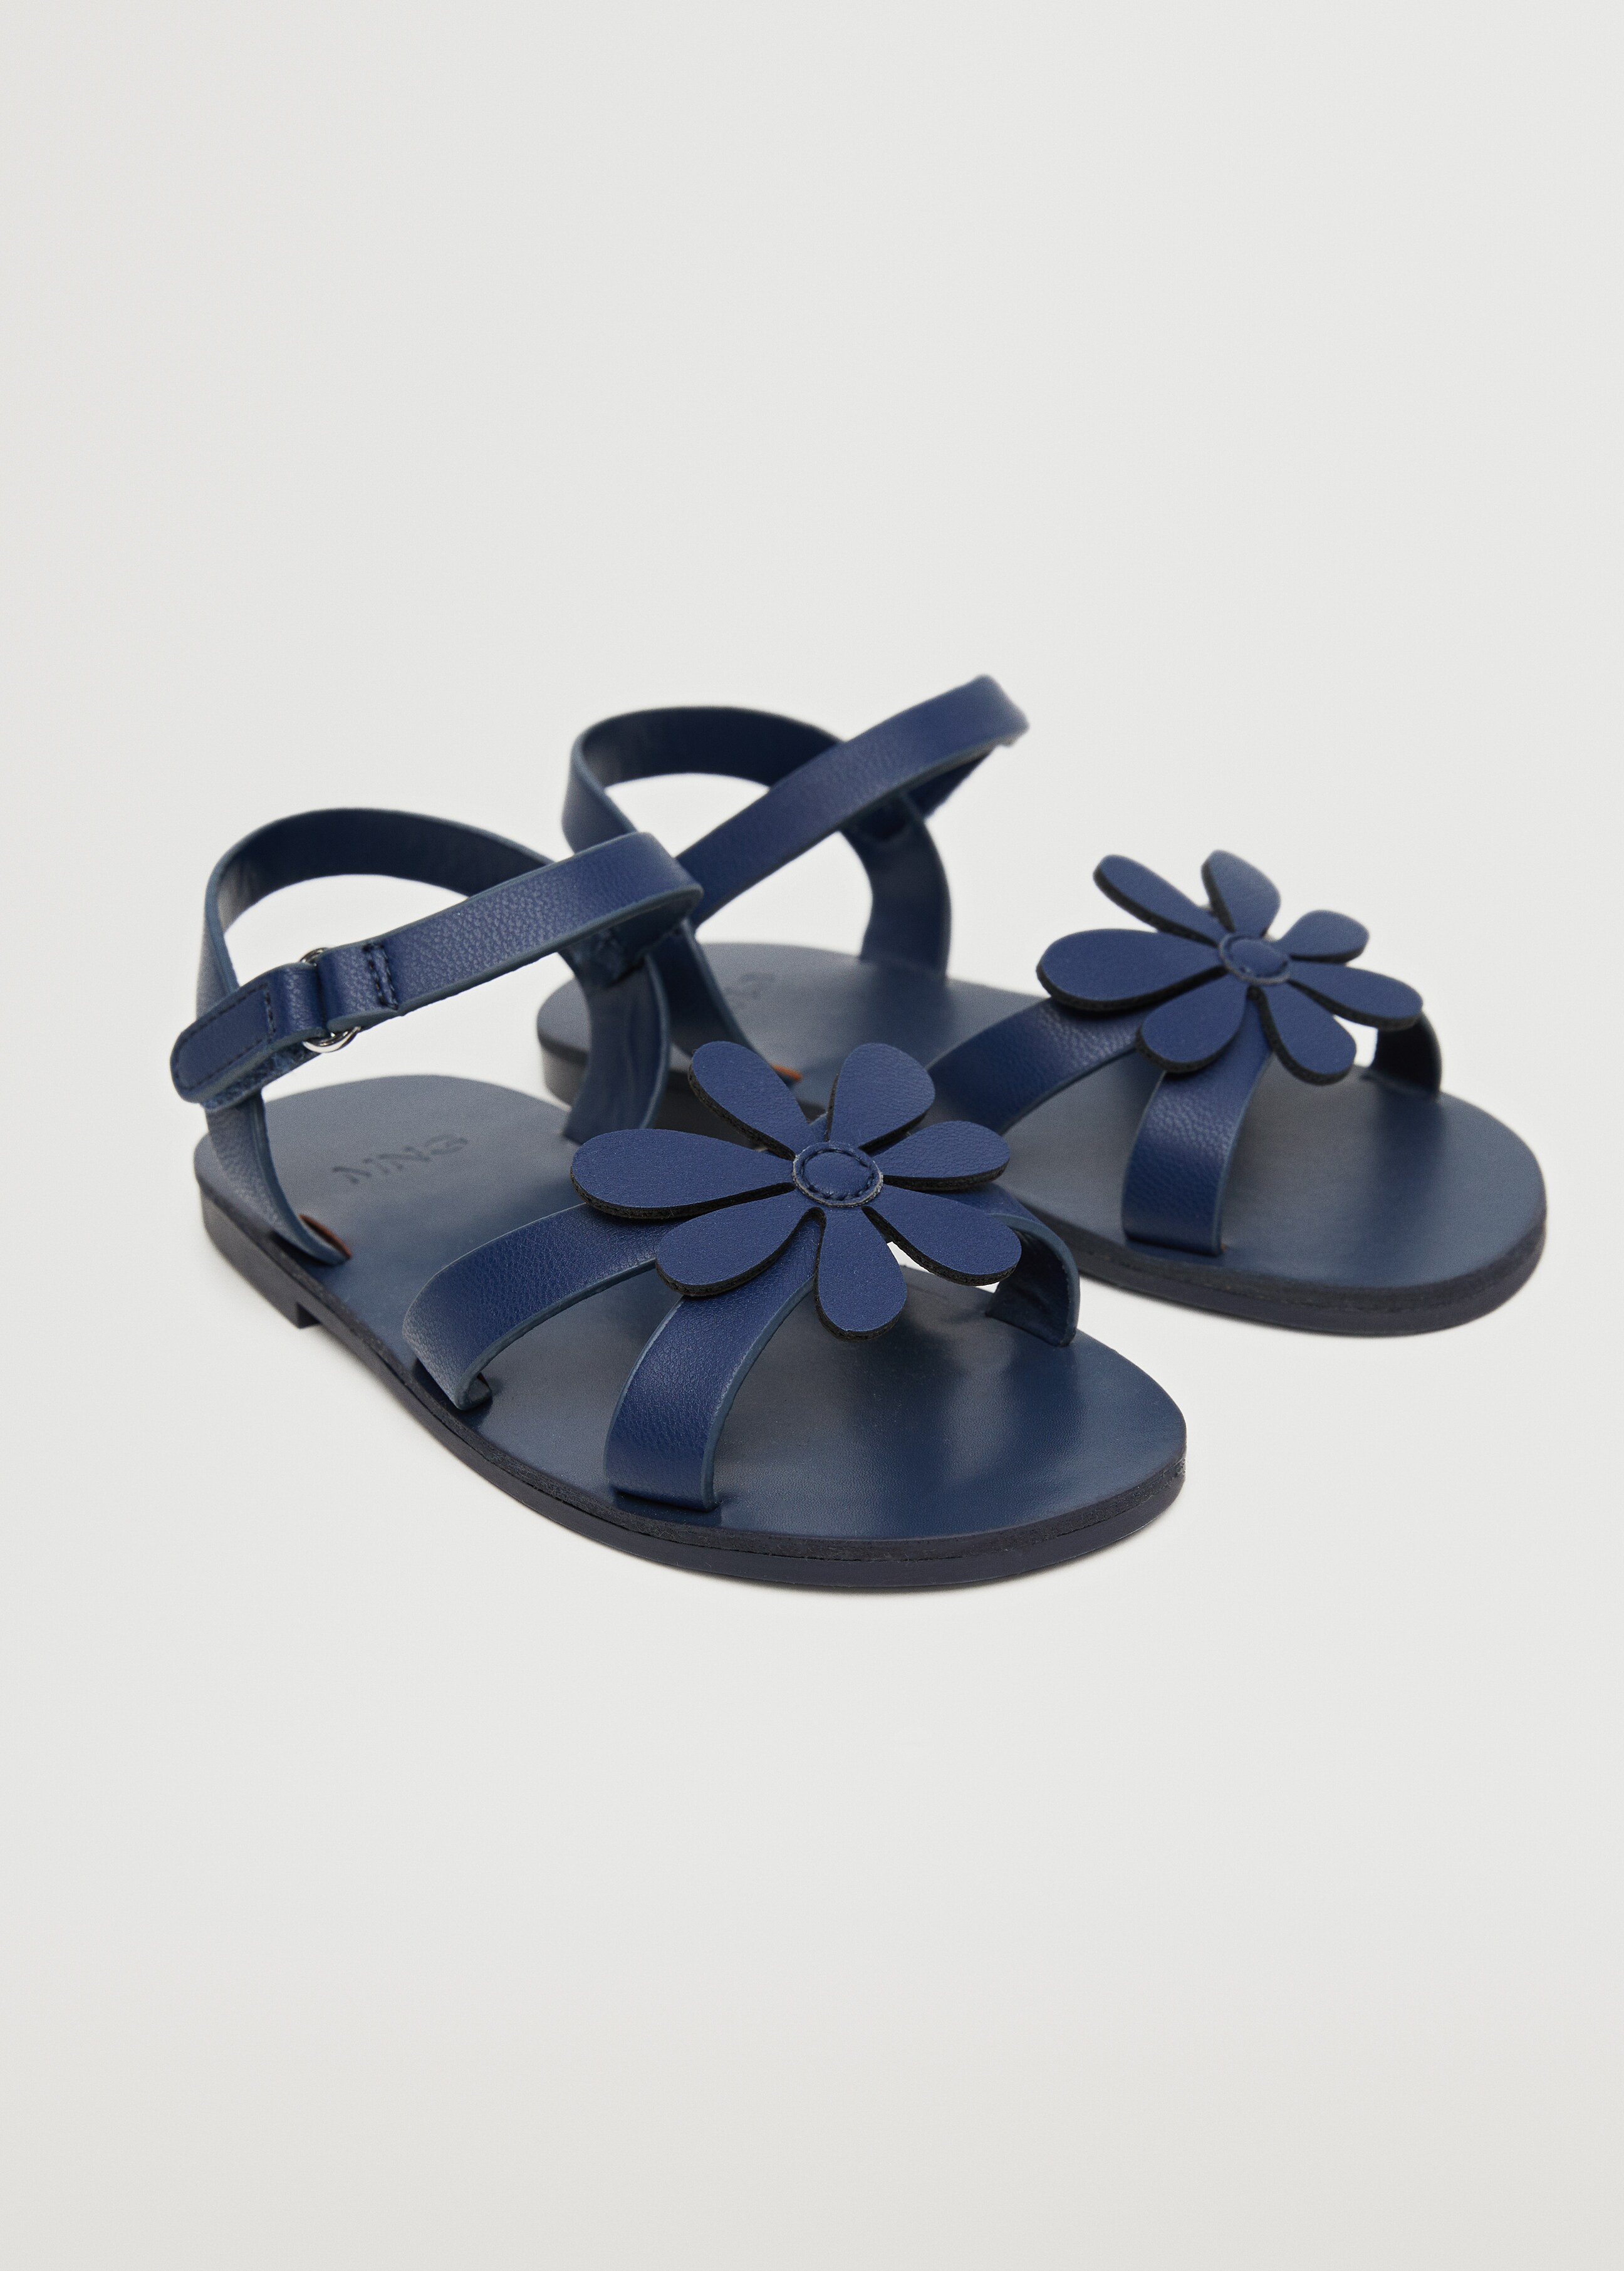 Flower appliqué sandals - Medium plane